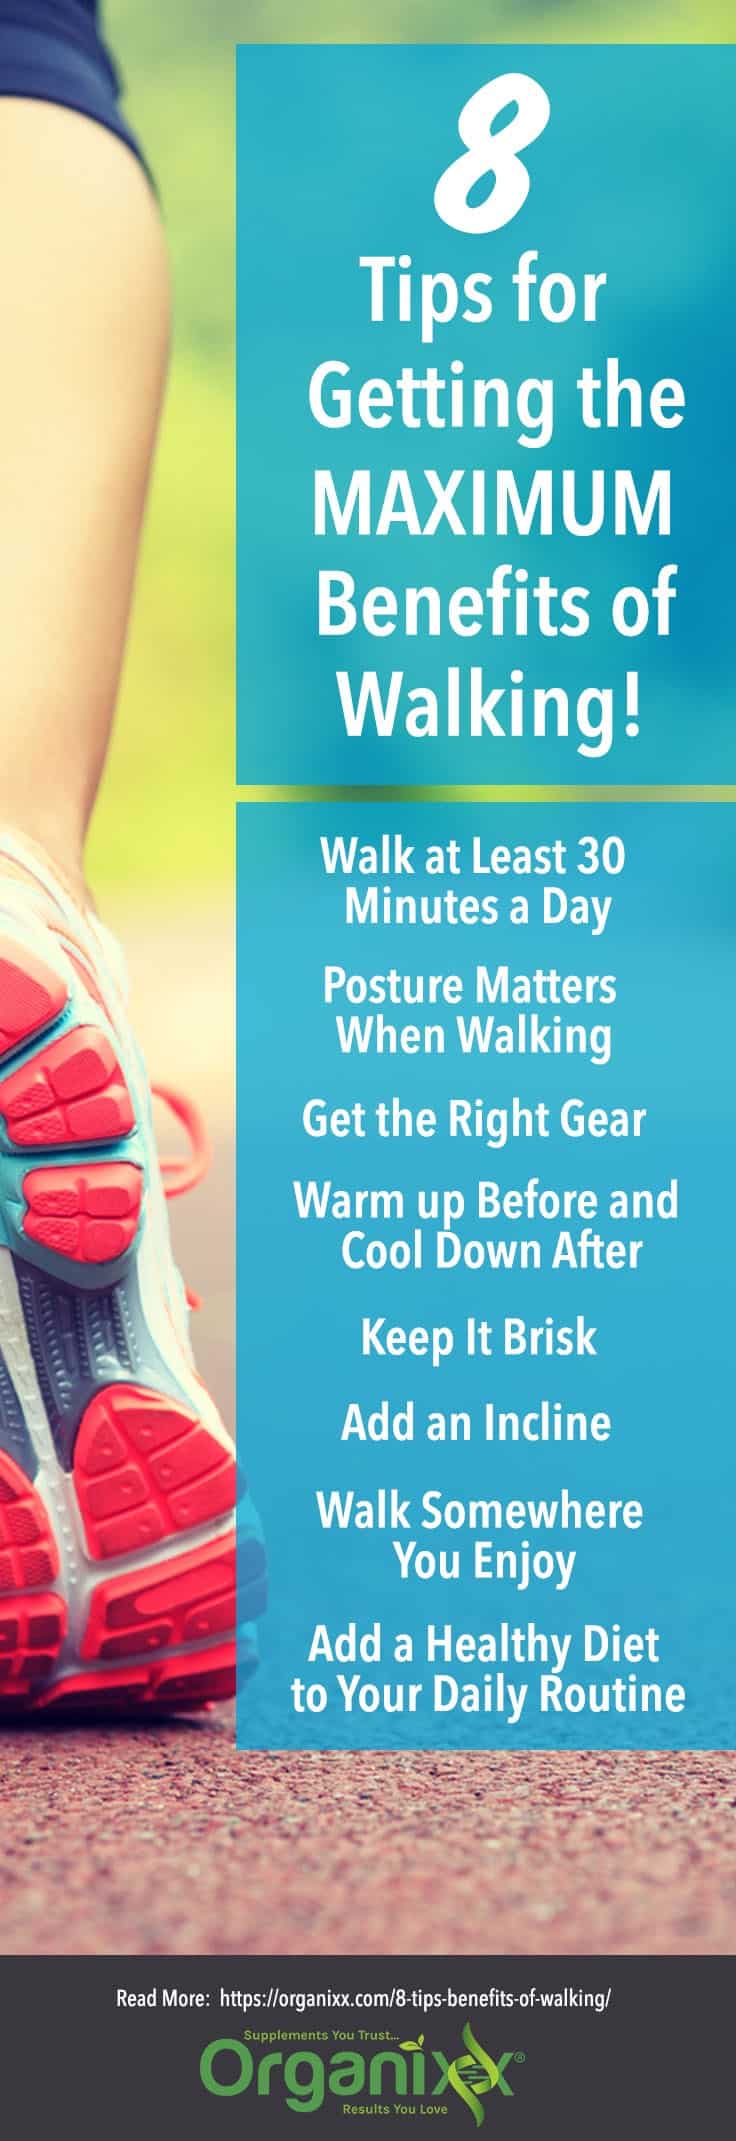 benefits of walking infographic